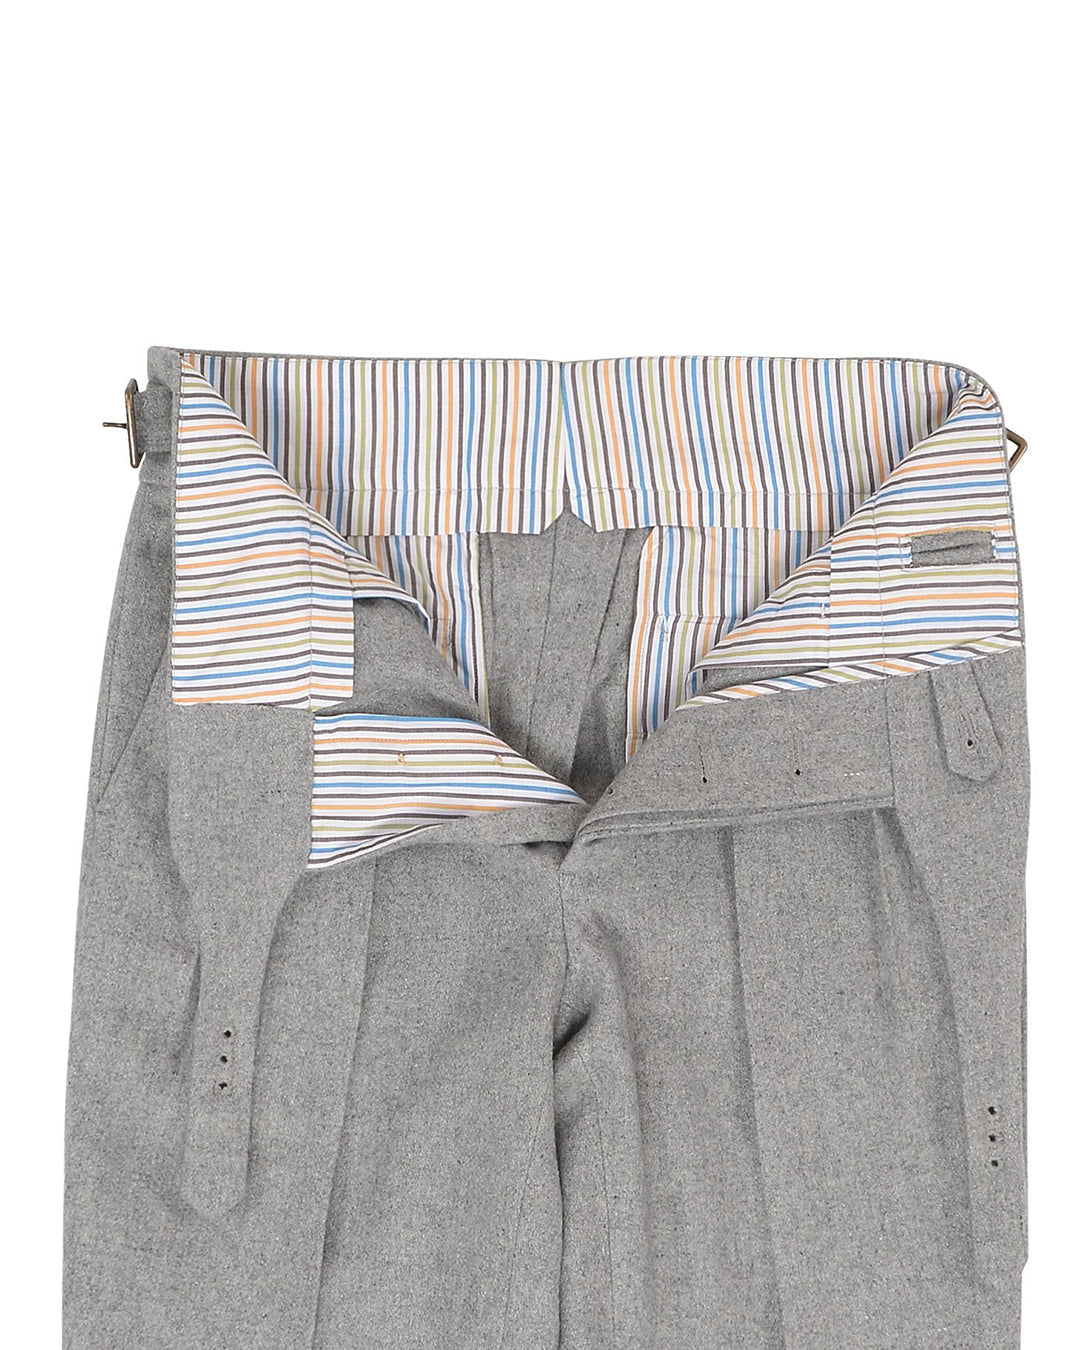 Gurkha Pant in Charcoal Grey 100% Wool Flannel – Luxire Custom Clothing